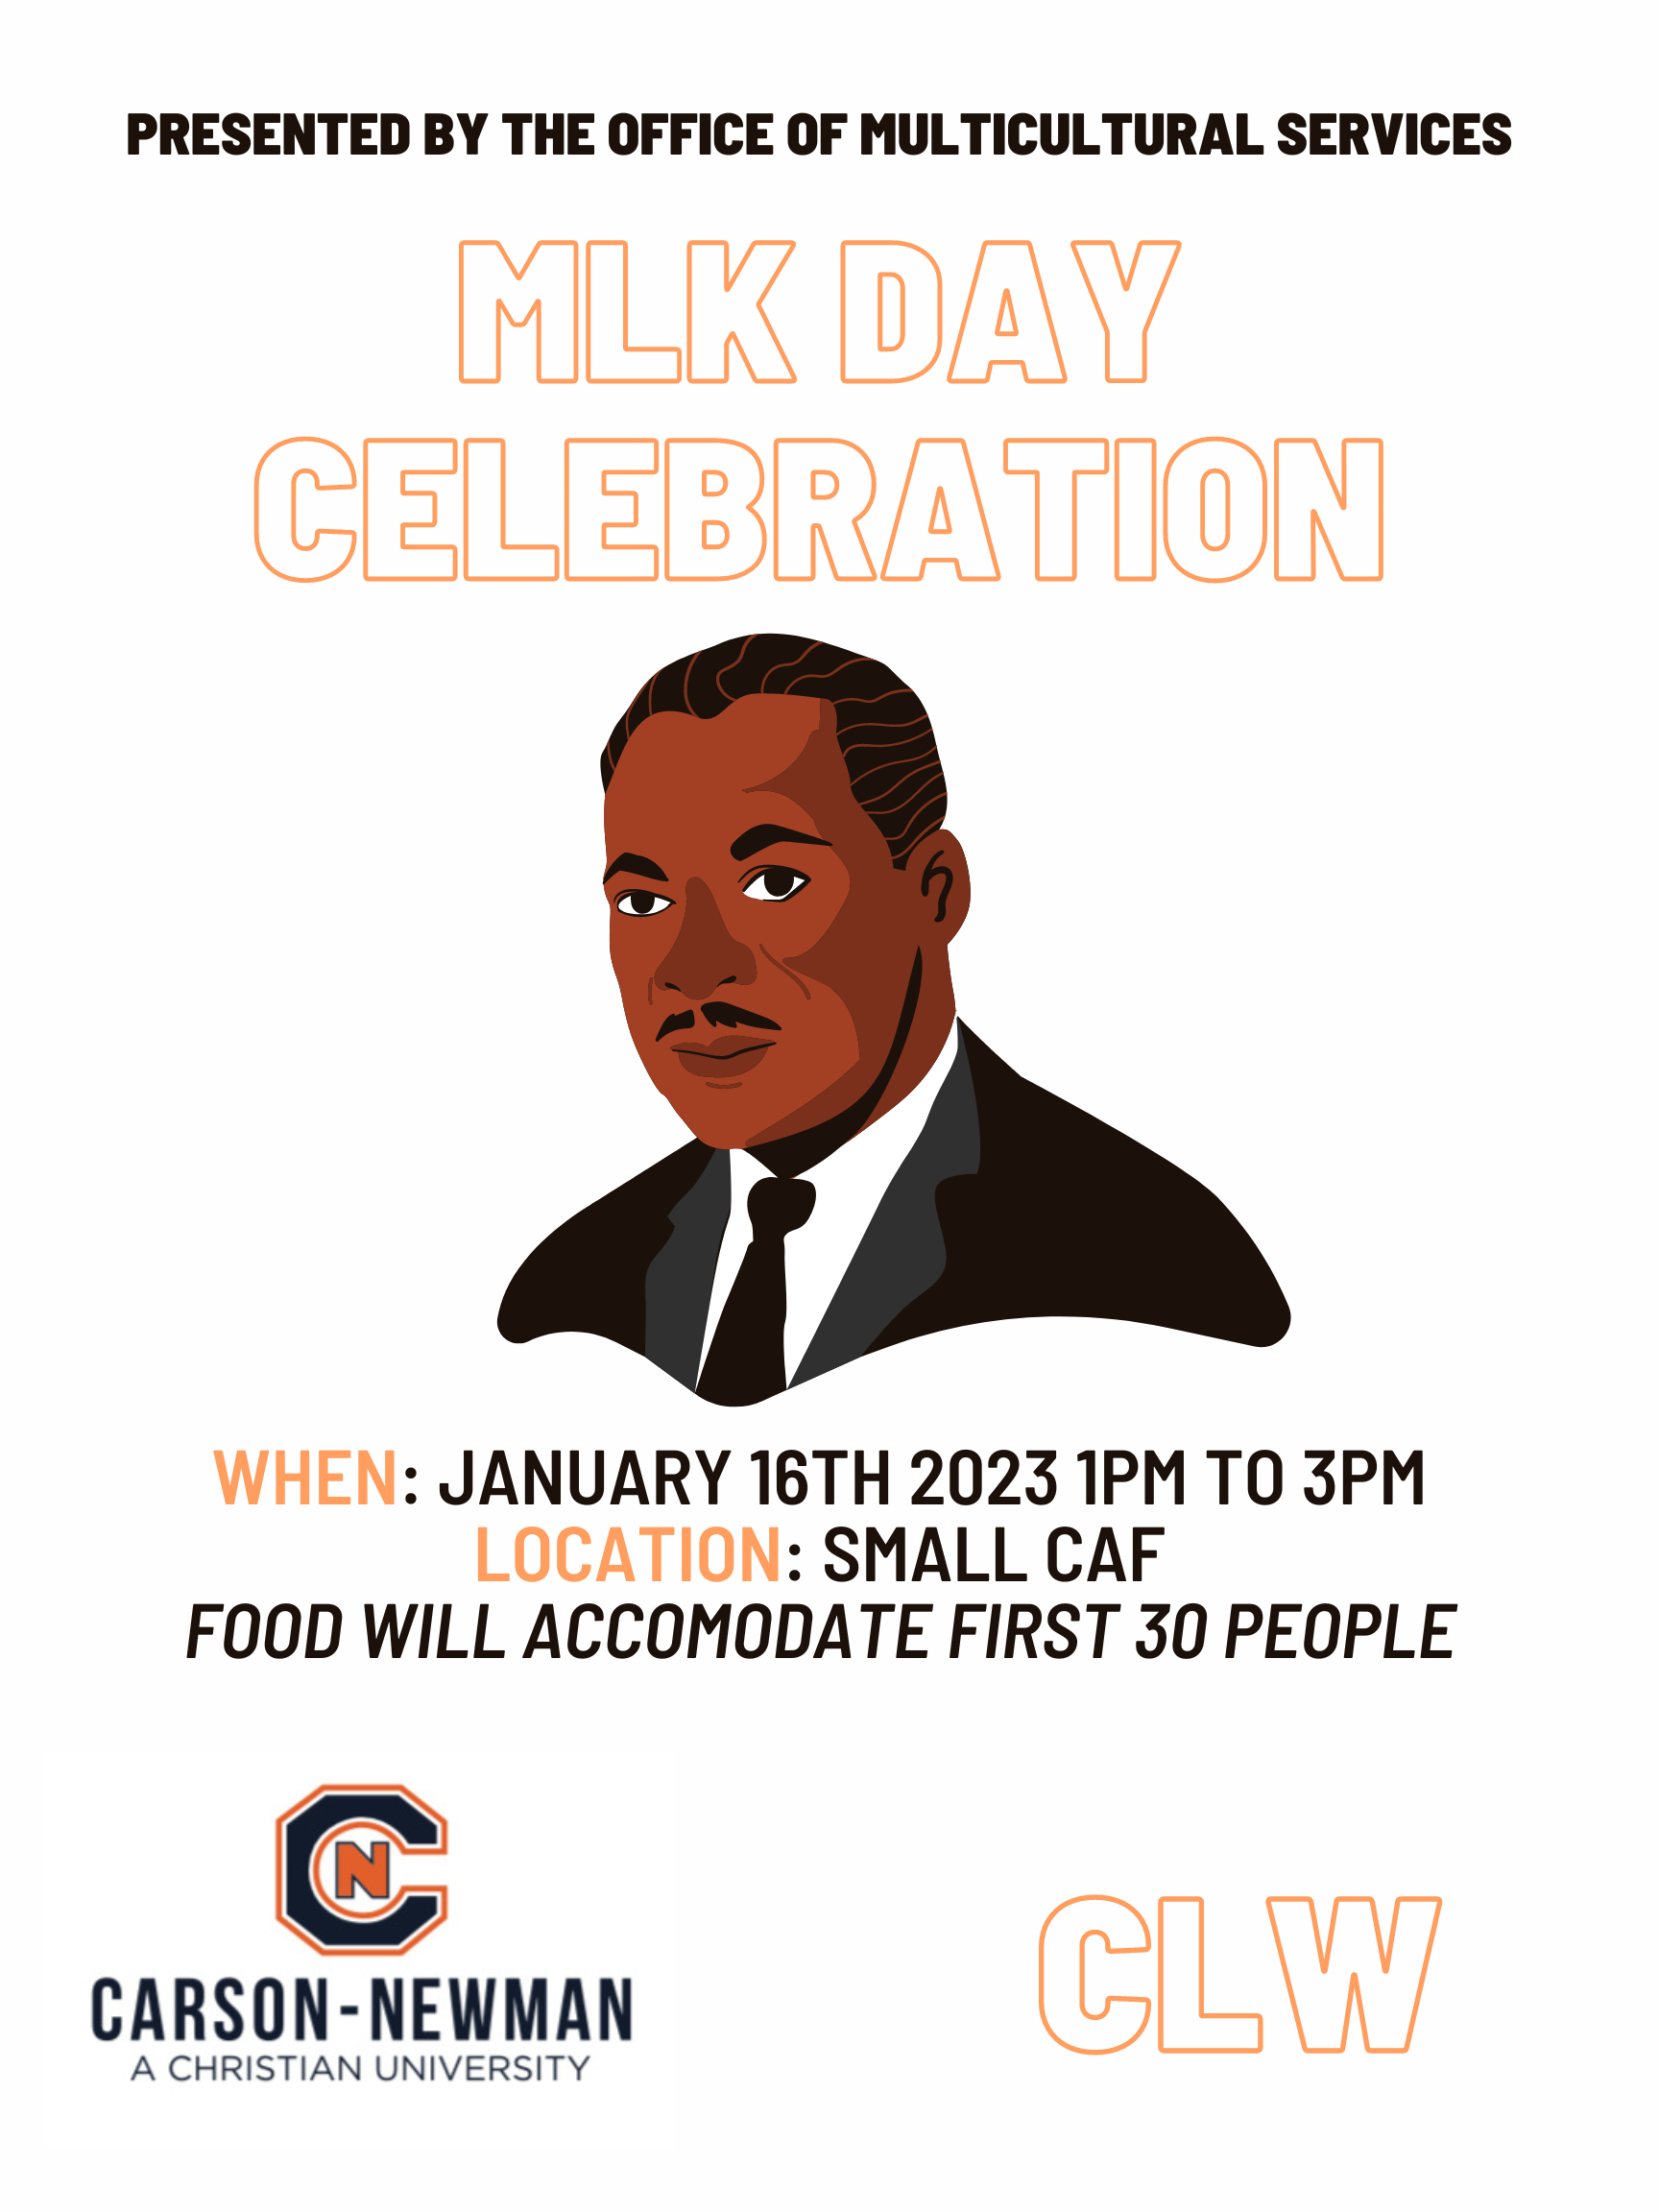 Invitation to an MLK Day celebration event